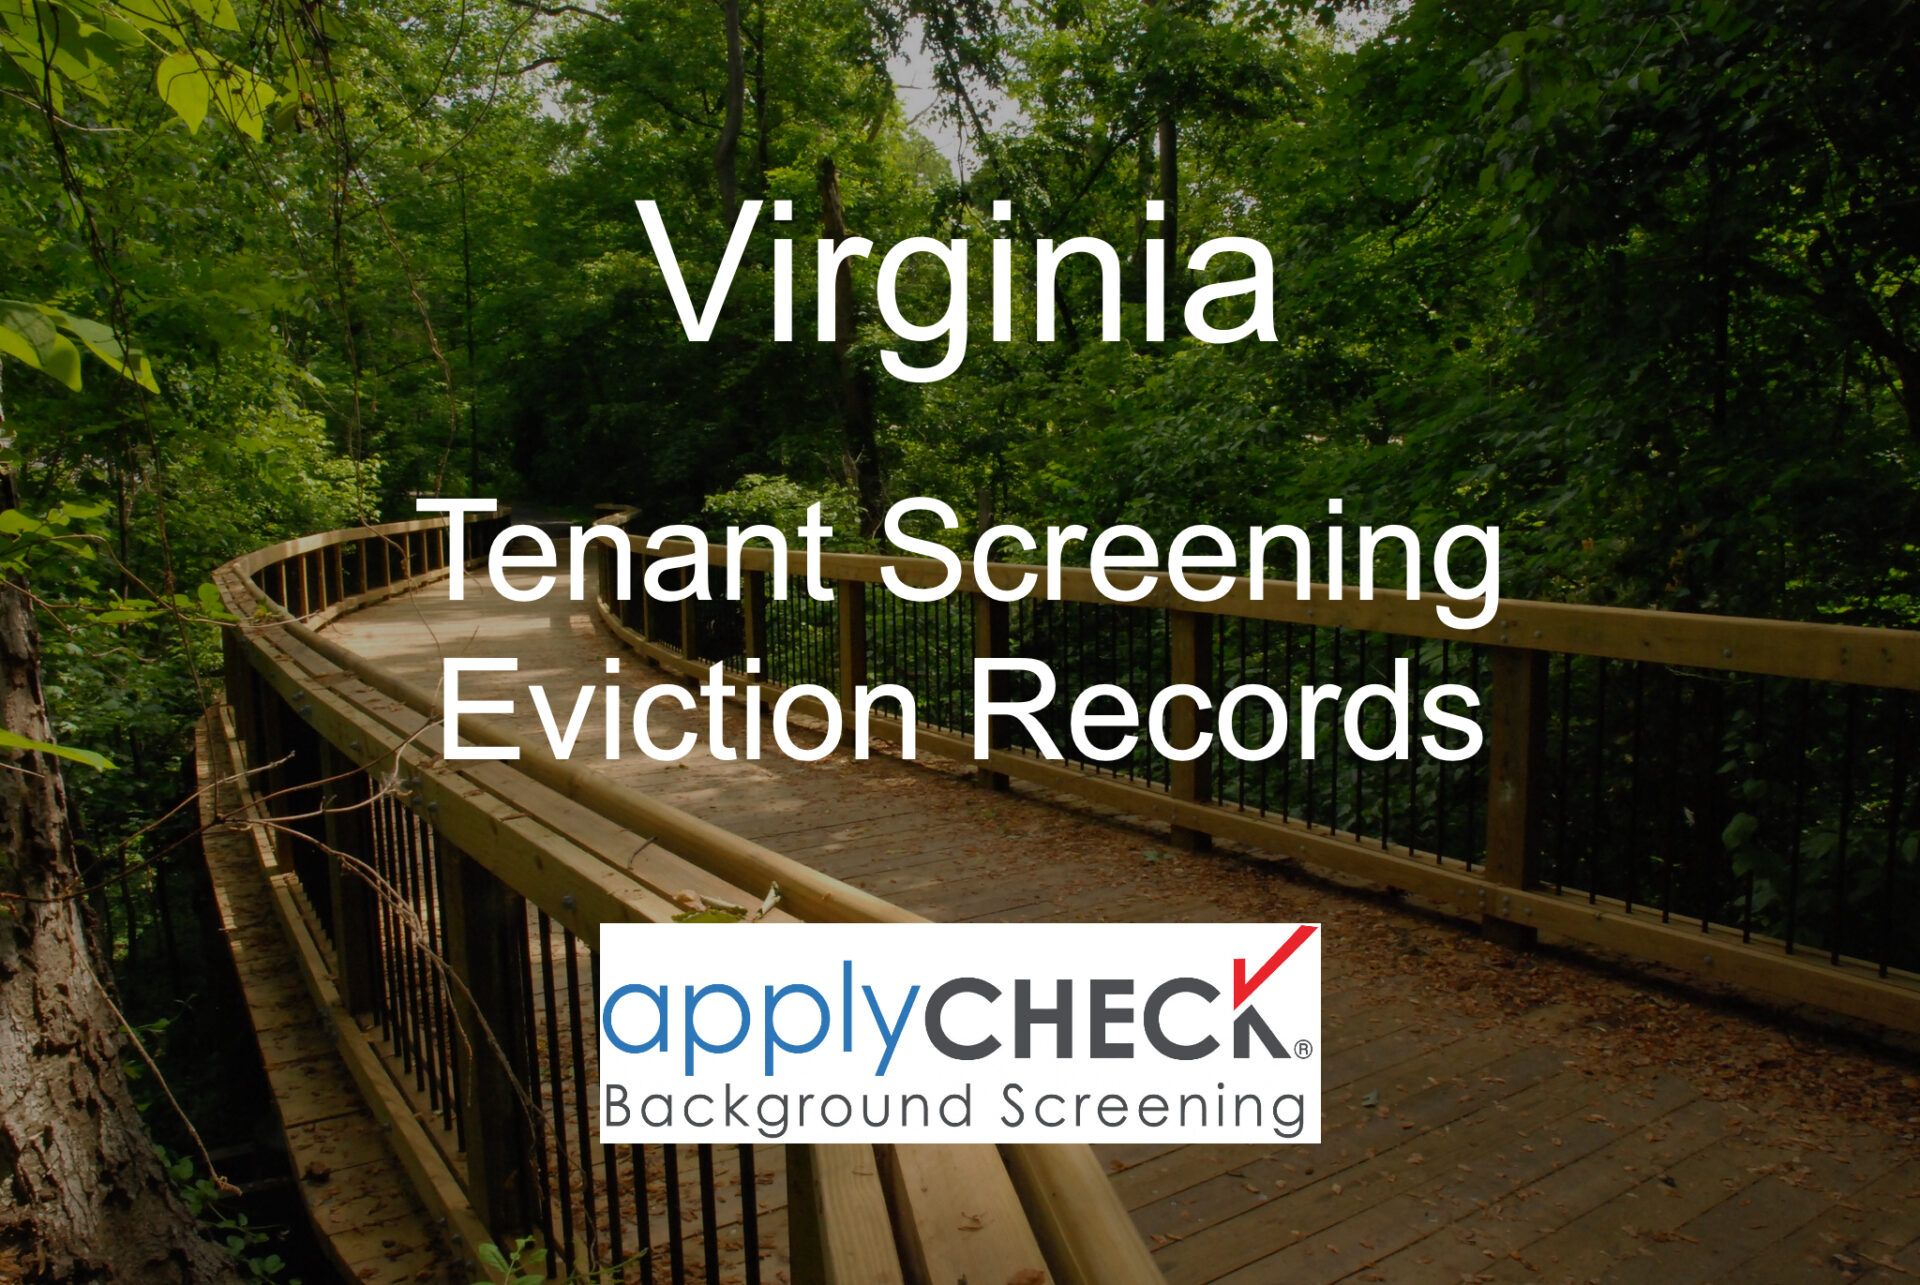 Virginia Tenant Screening and Eviction image